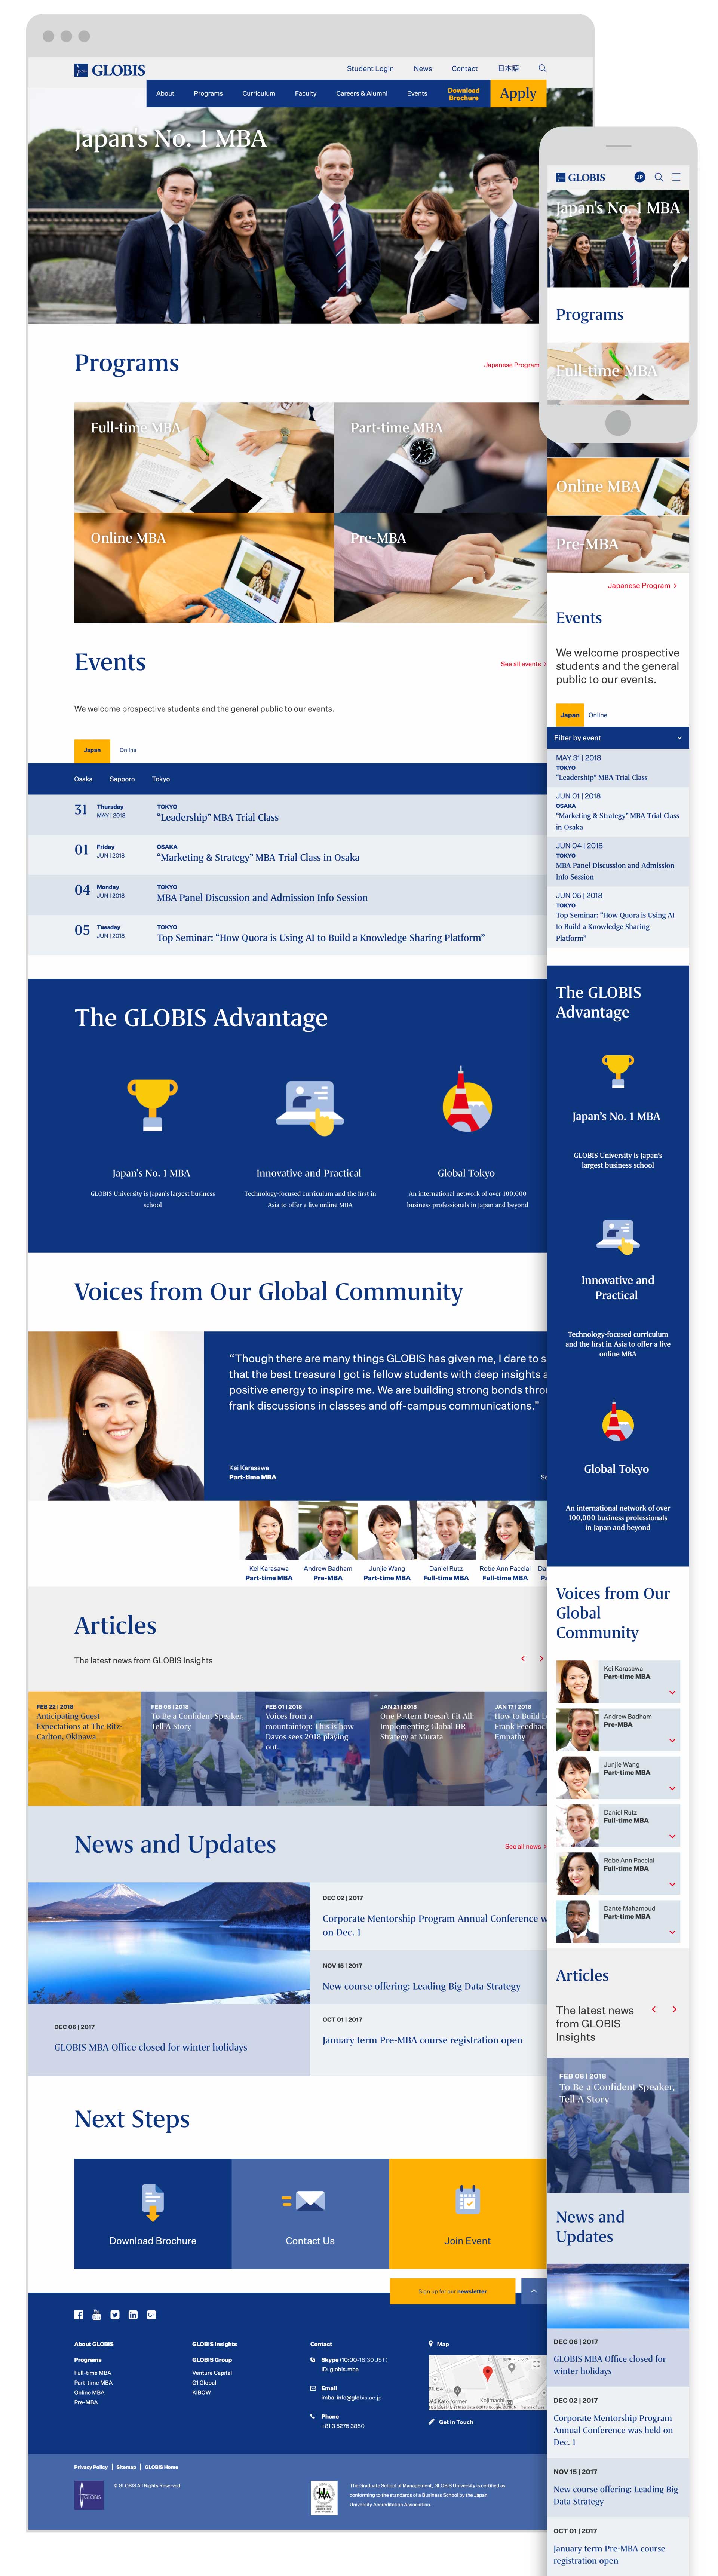 Globis University - Responsive UI Layout Design - Homepage